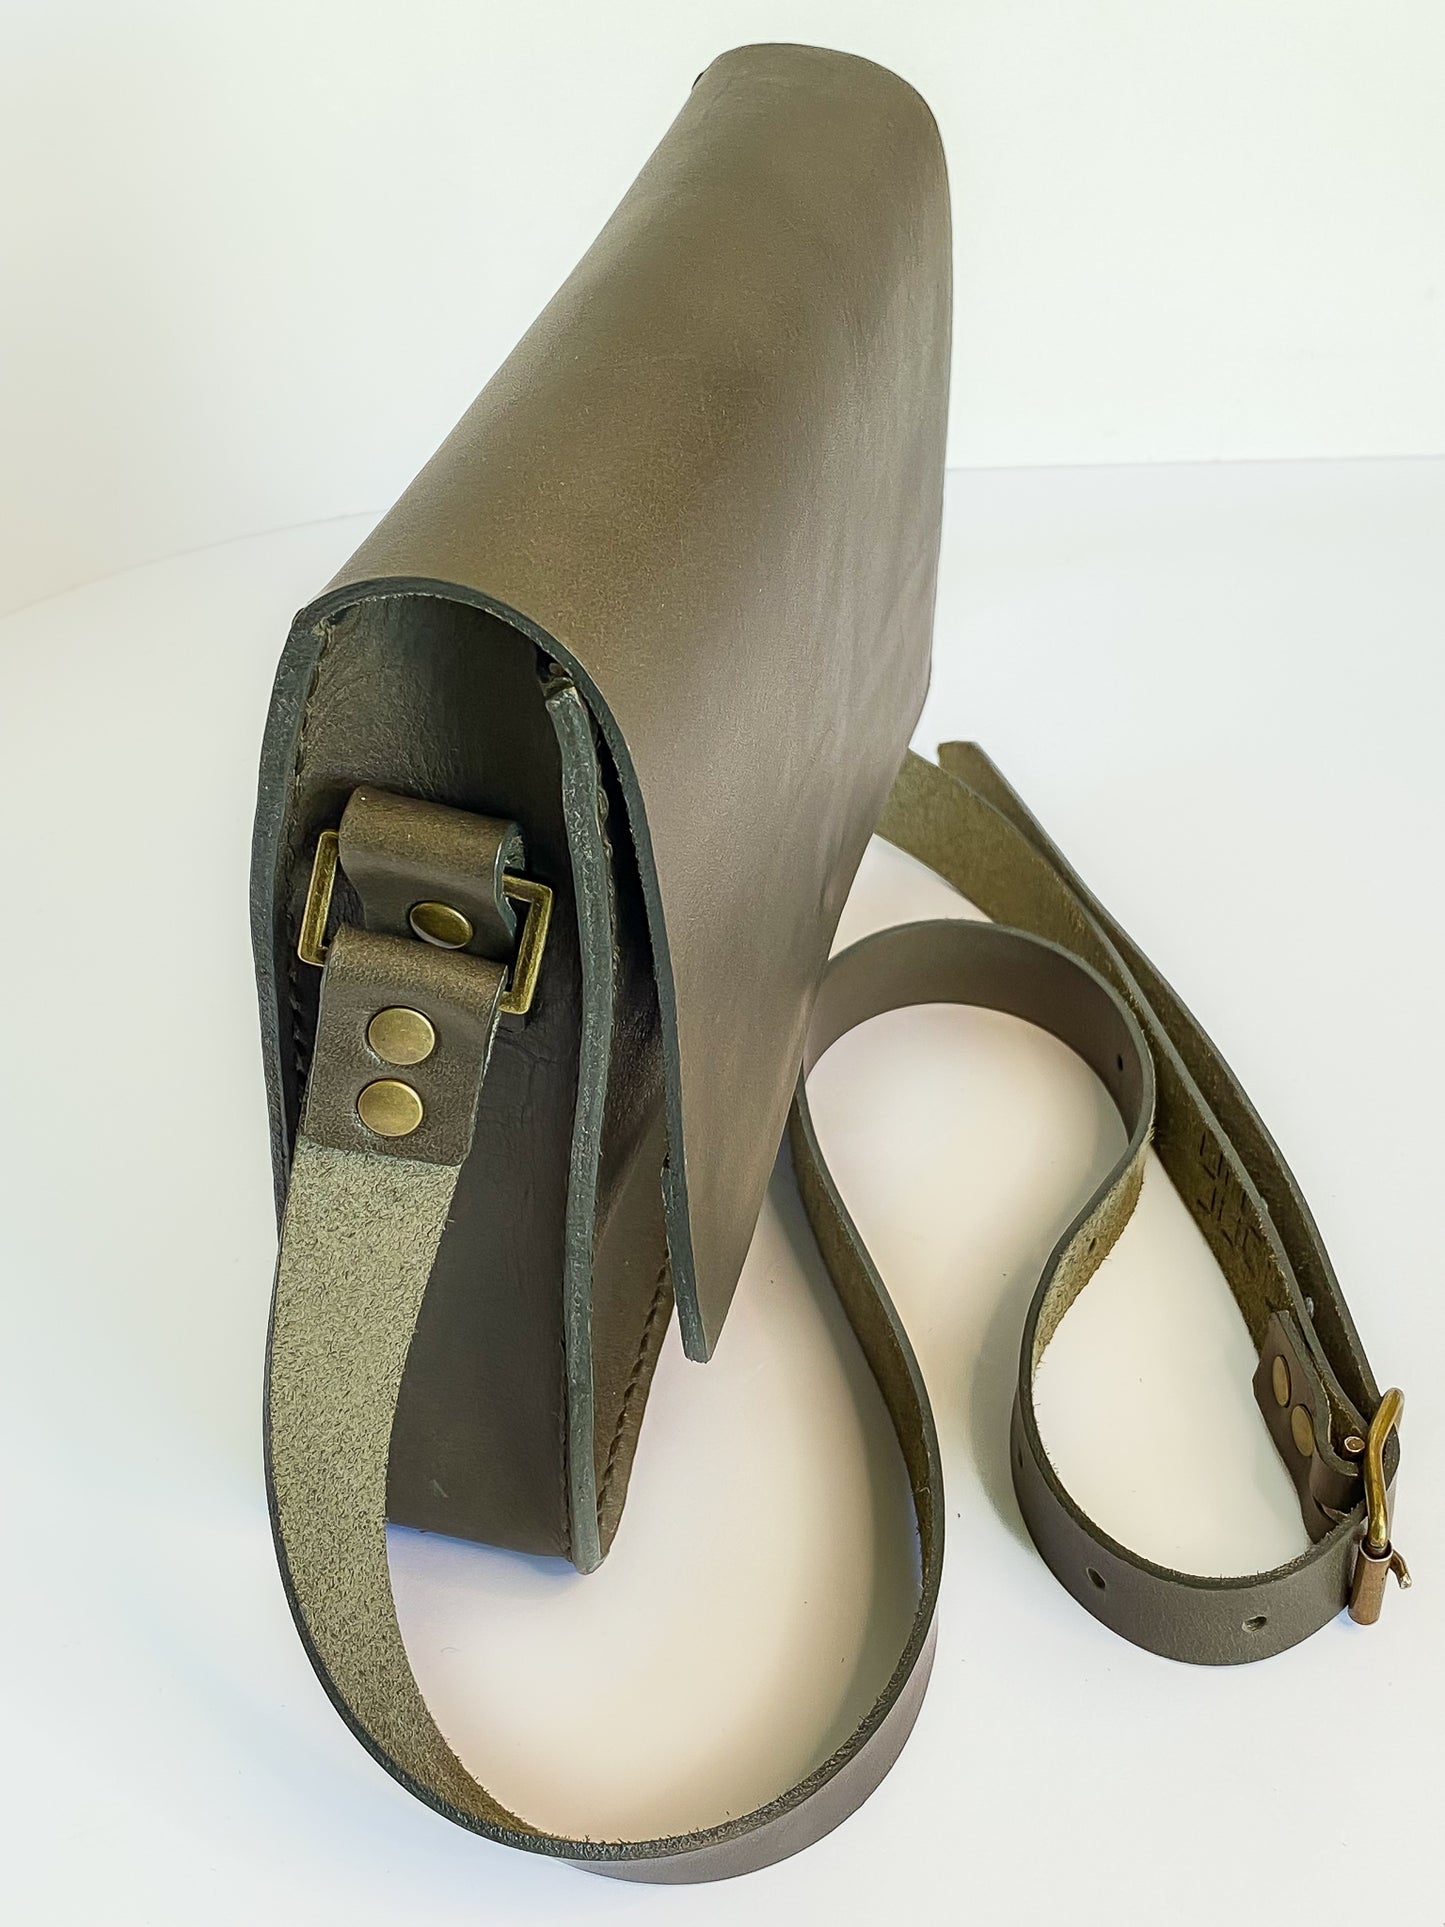 Sanna Leather Compact Contemporary Messenger Bag